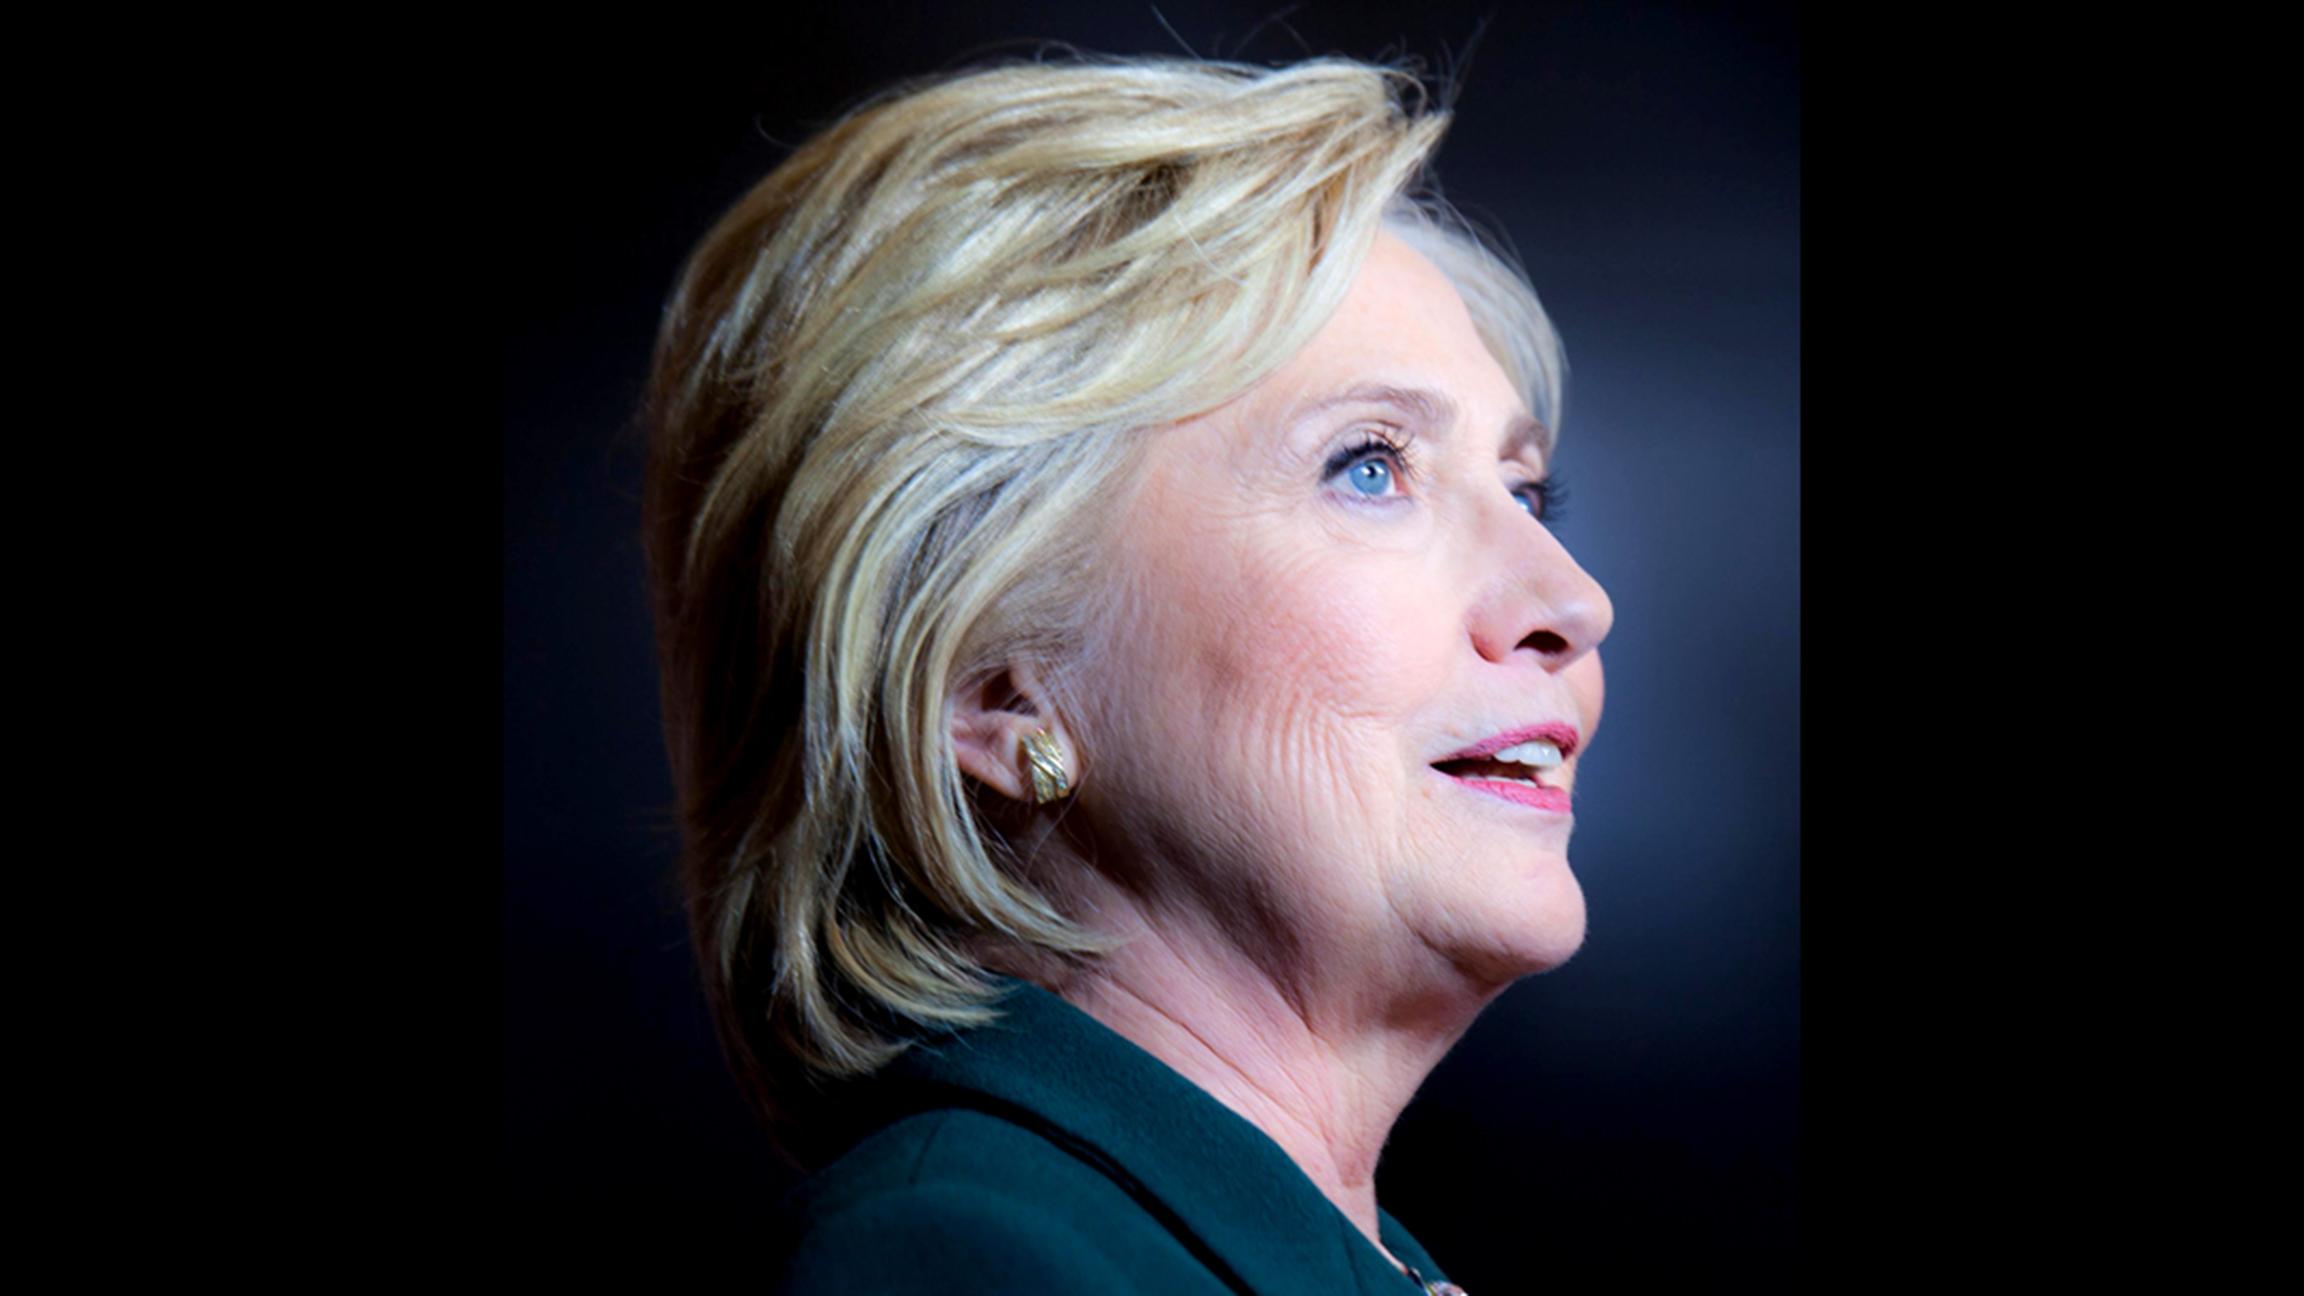 Profile: Hillary Clinton, News